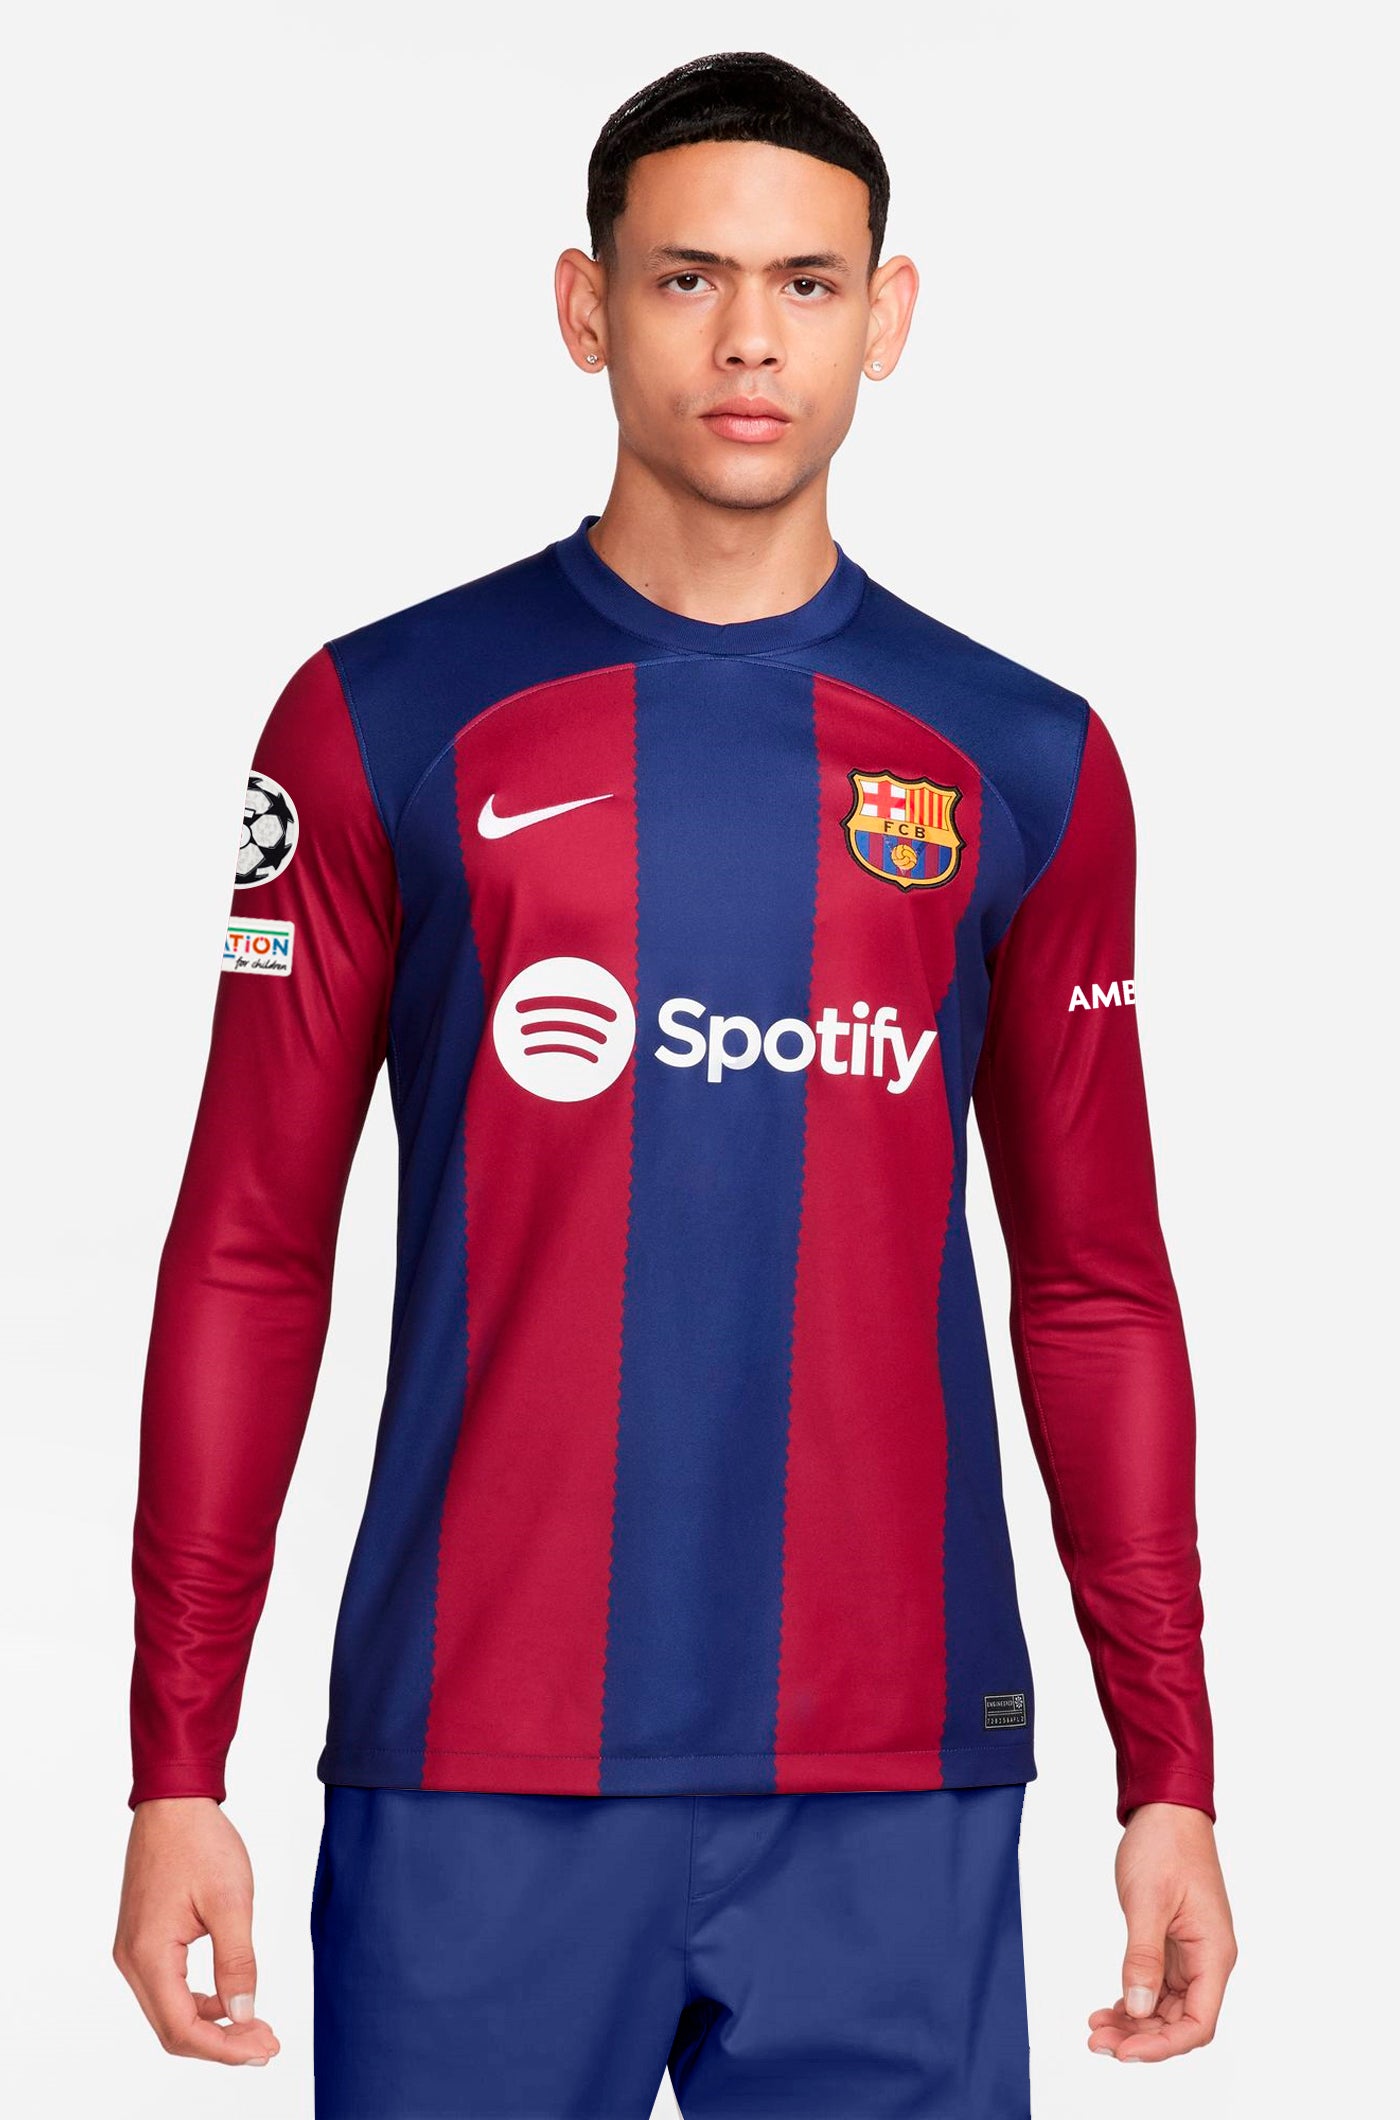 UCL FC Barcelona home shirt 23/24 - Long-sleeve - R. ARAUJO